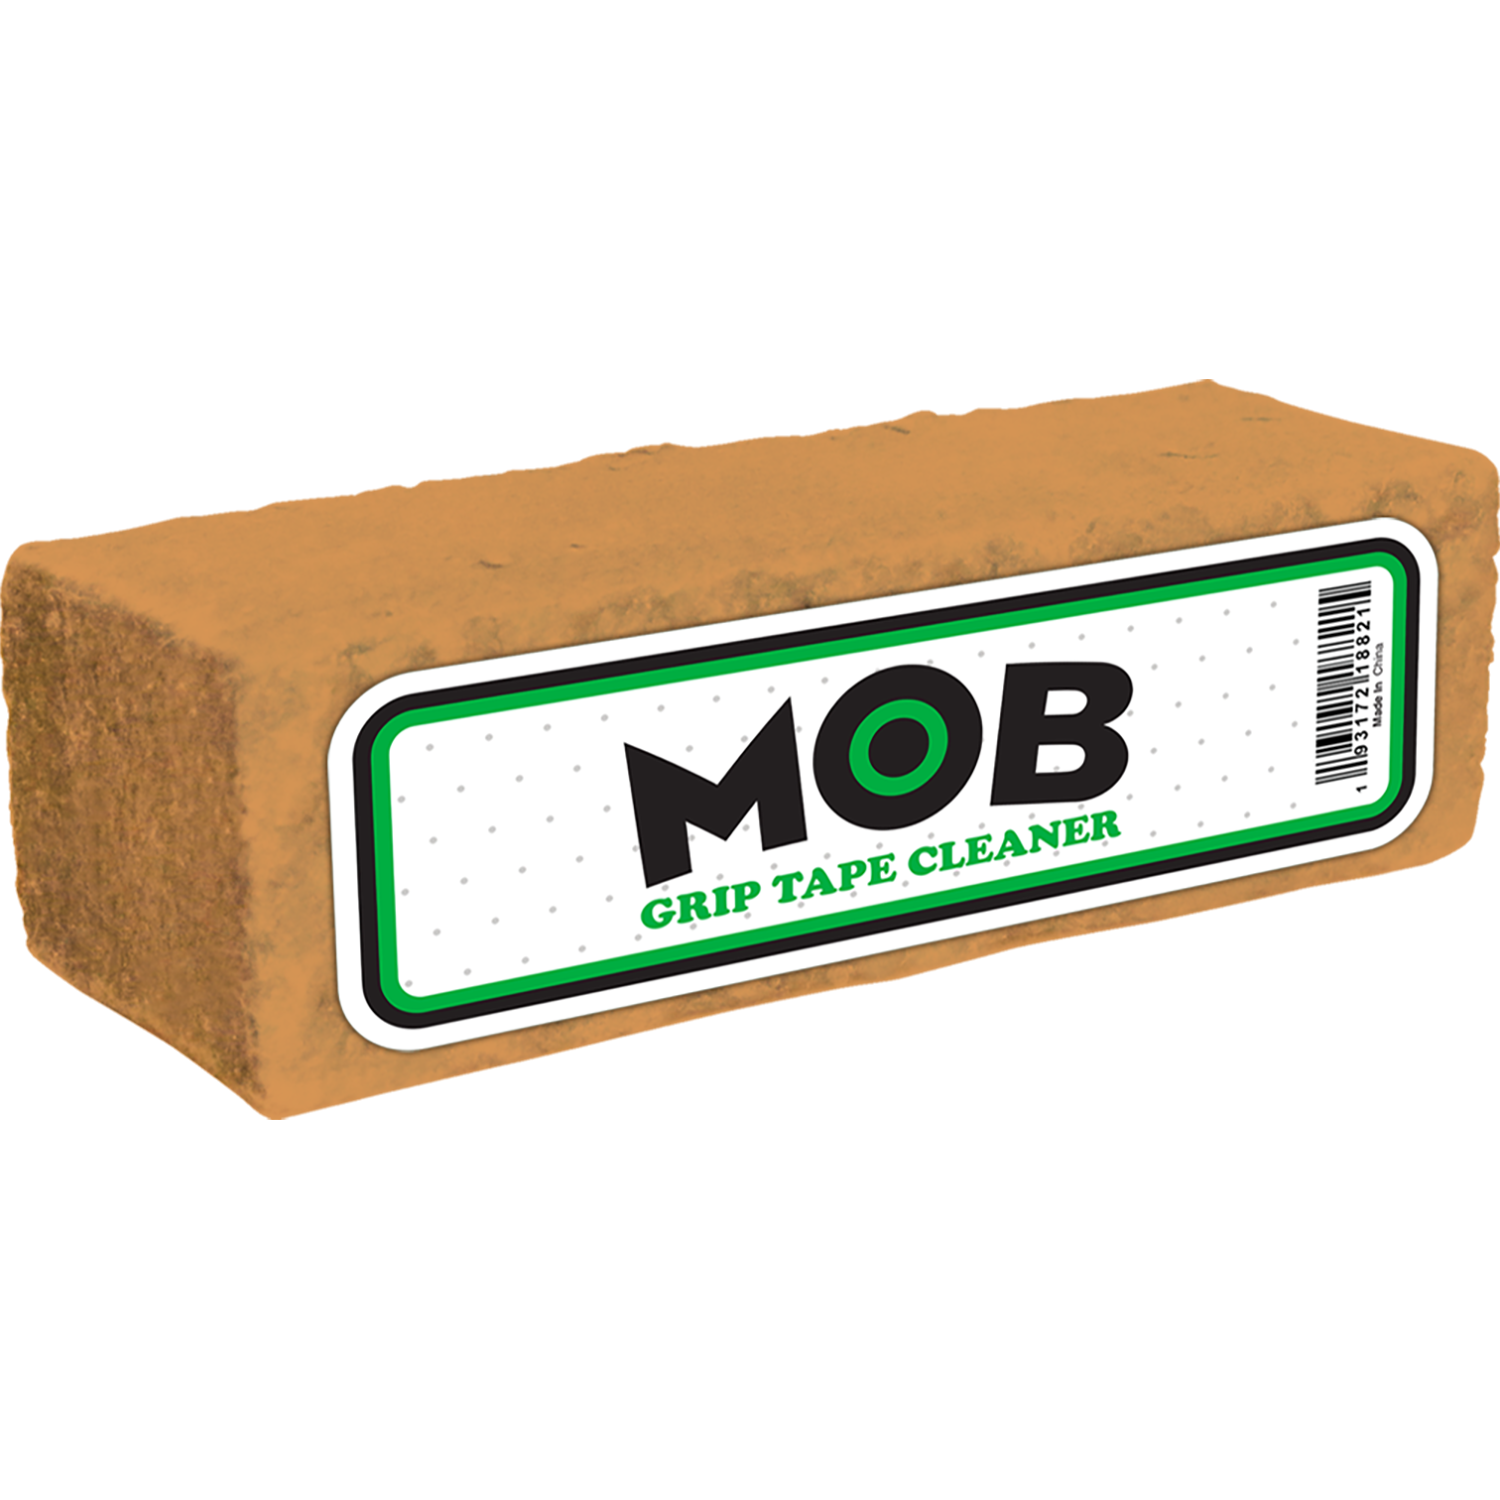 Mob Griptape Cleaner Stick Gum Natural - Invisible Board Shop